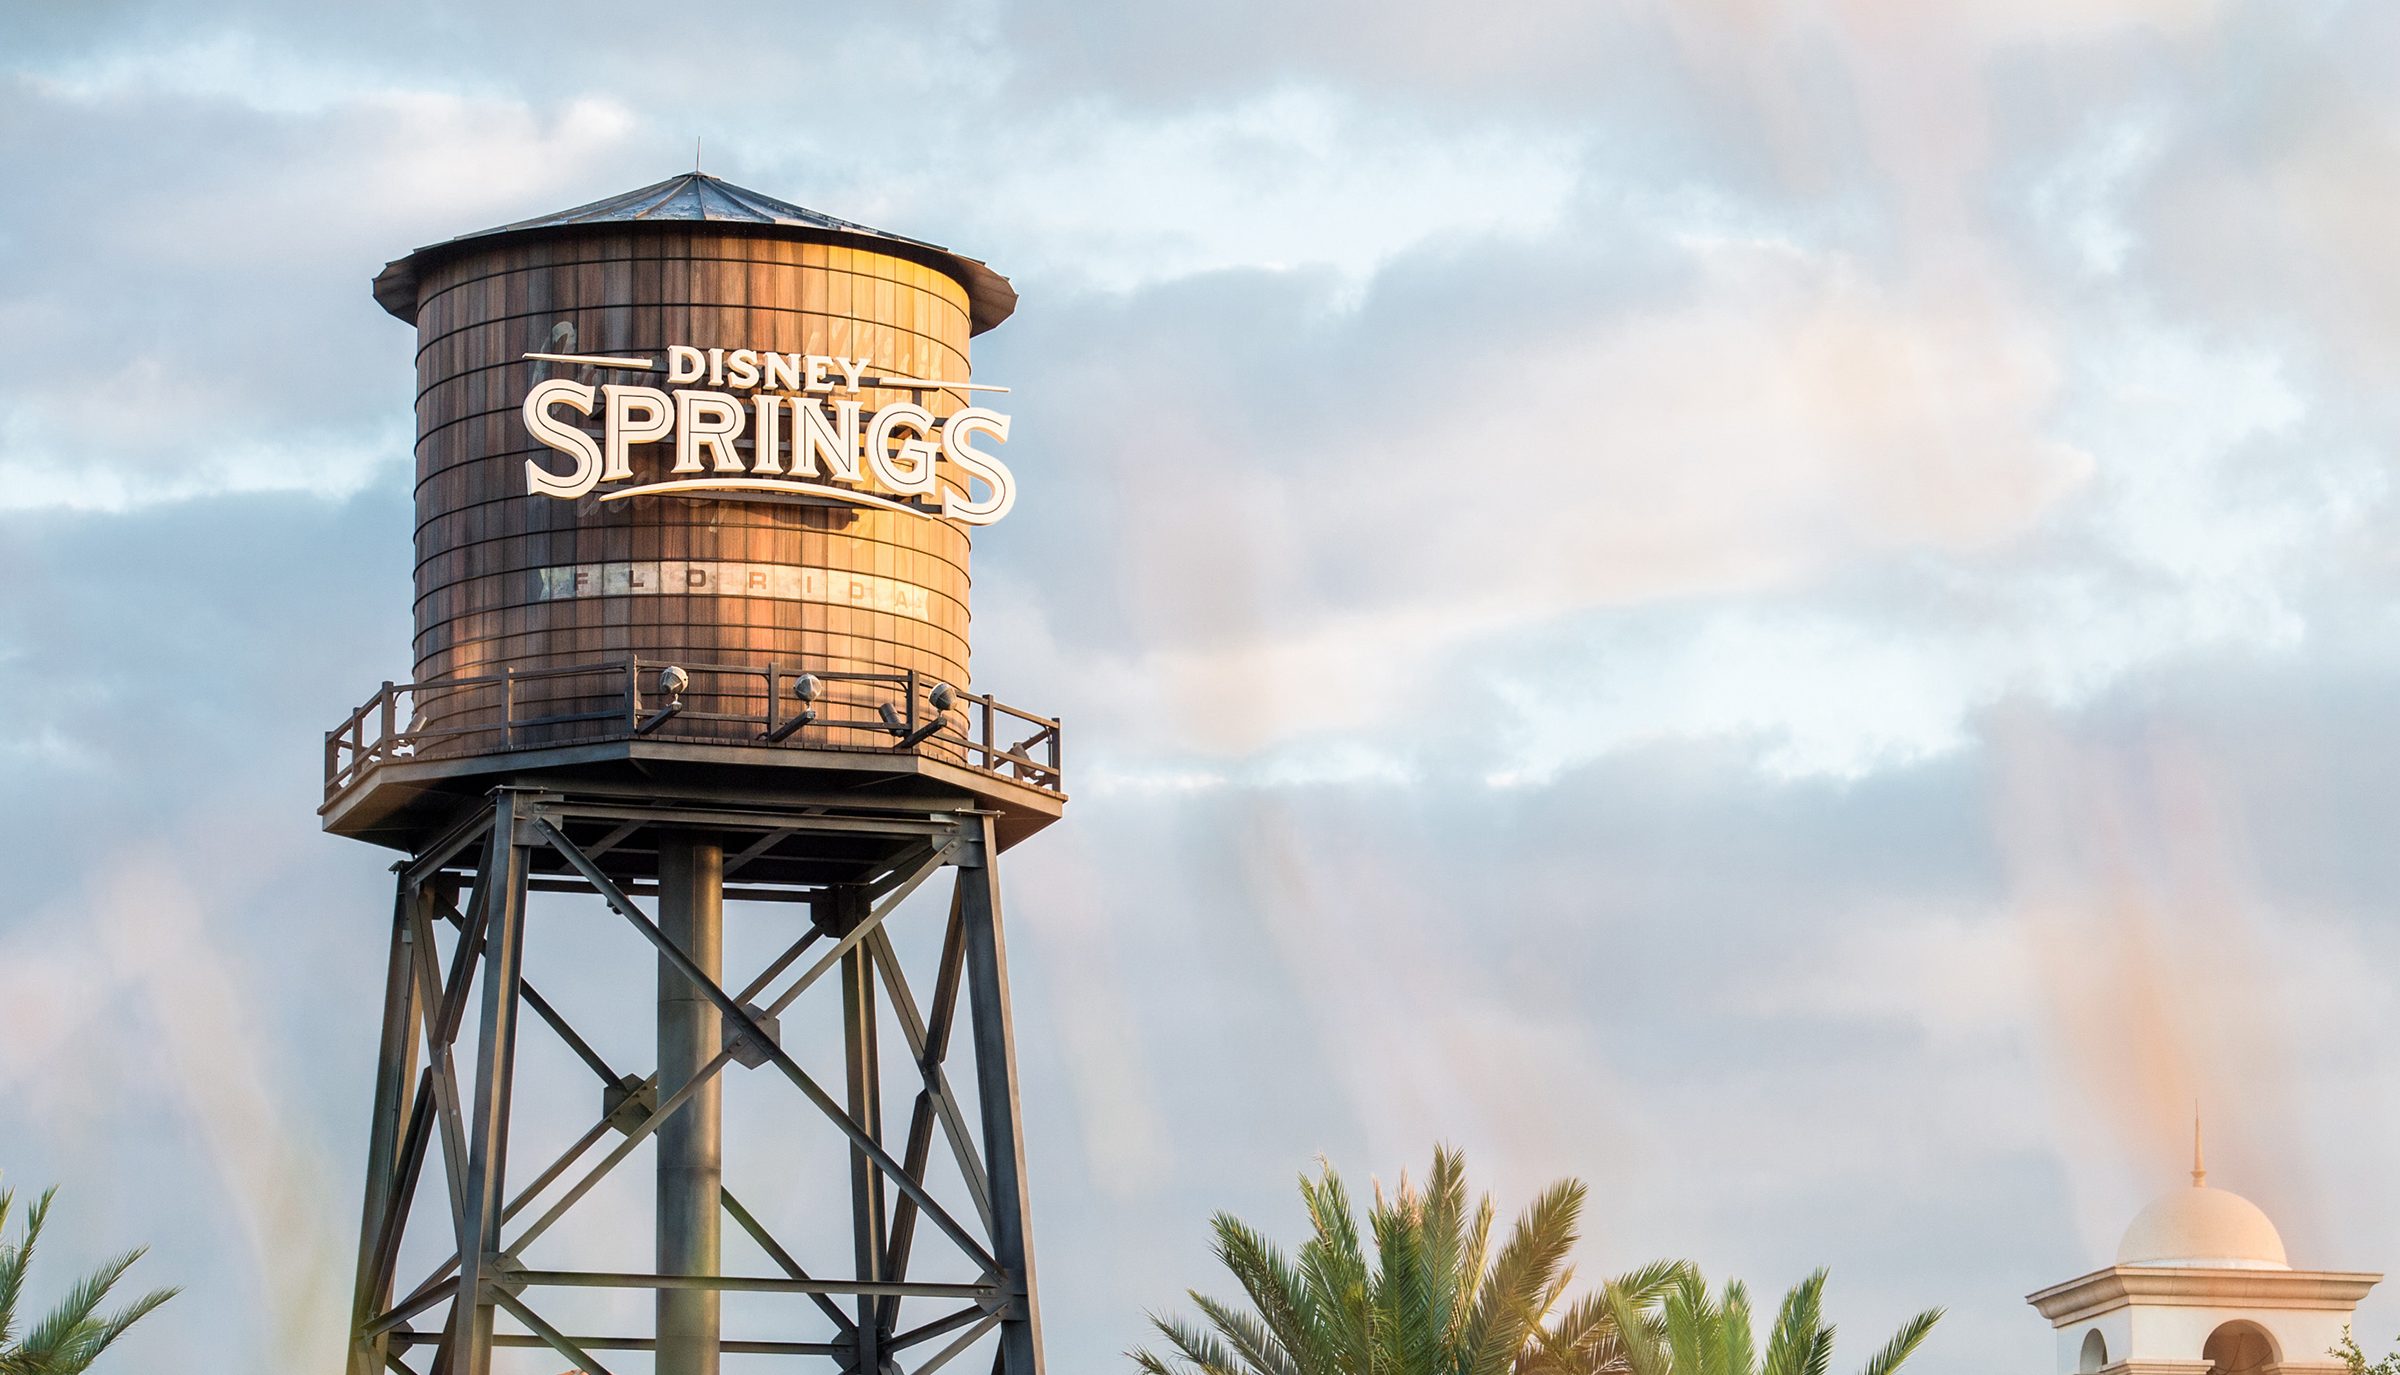 Splitsville Terminates All Employees Due to Disney Springs